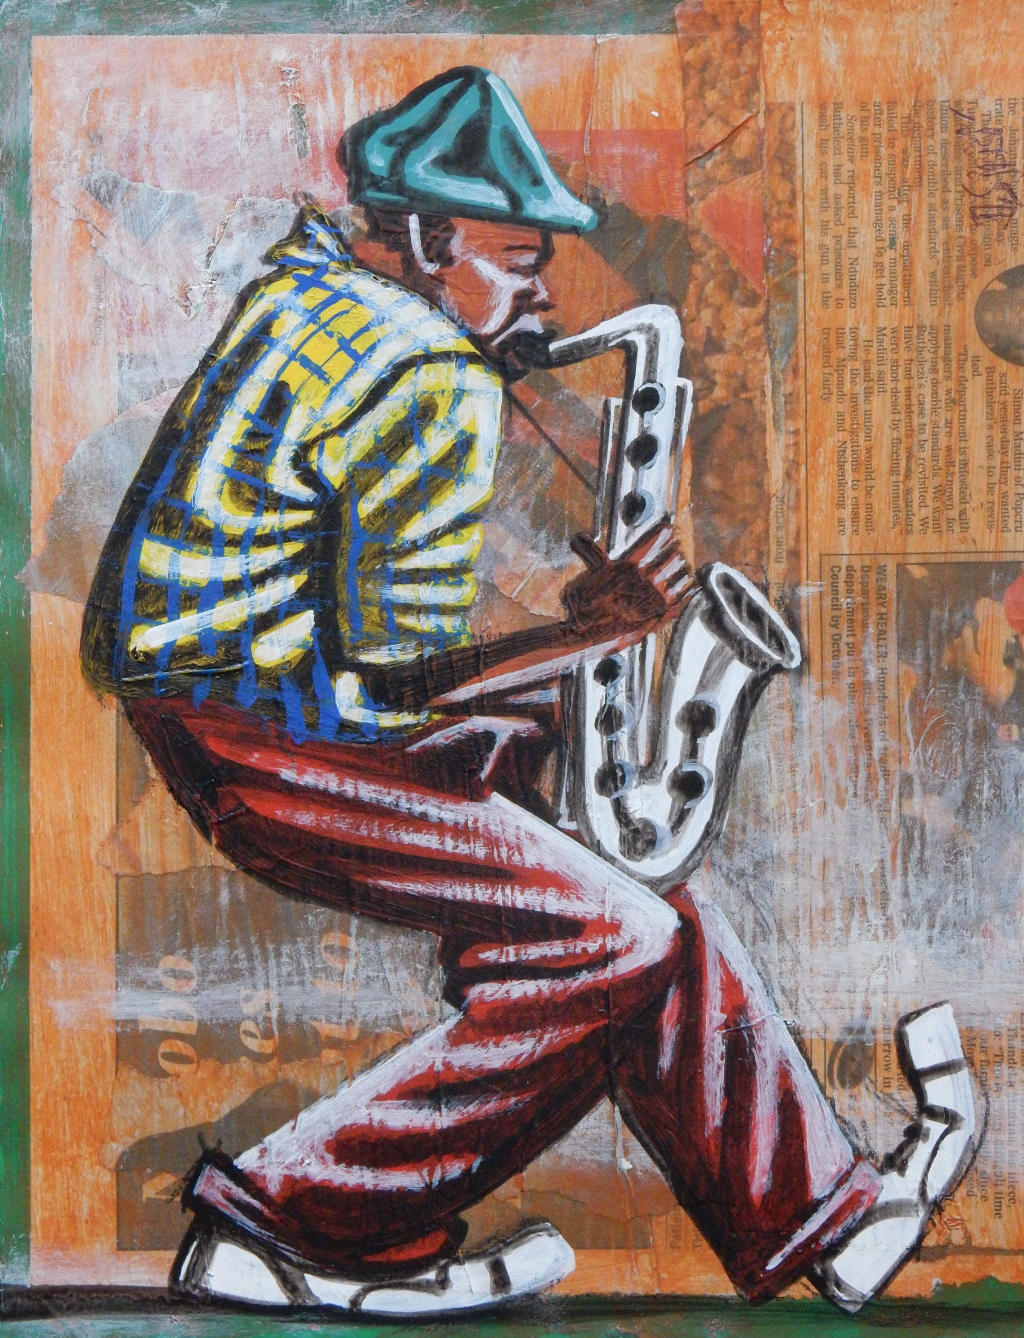 Saxophone Player